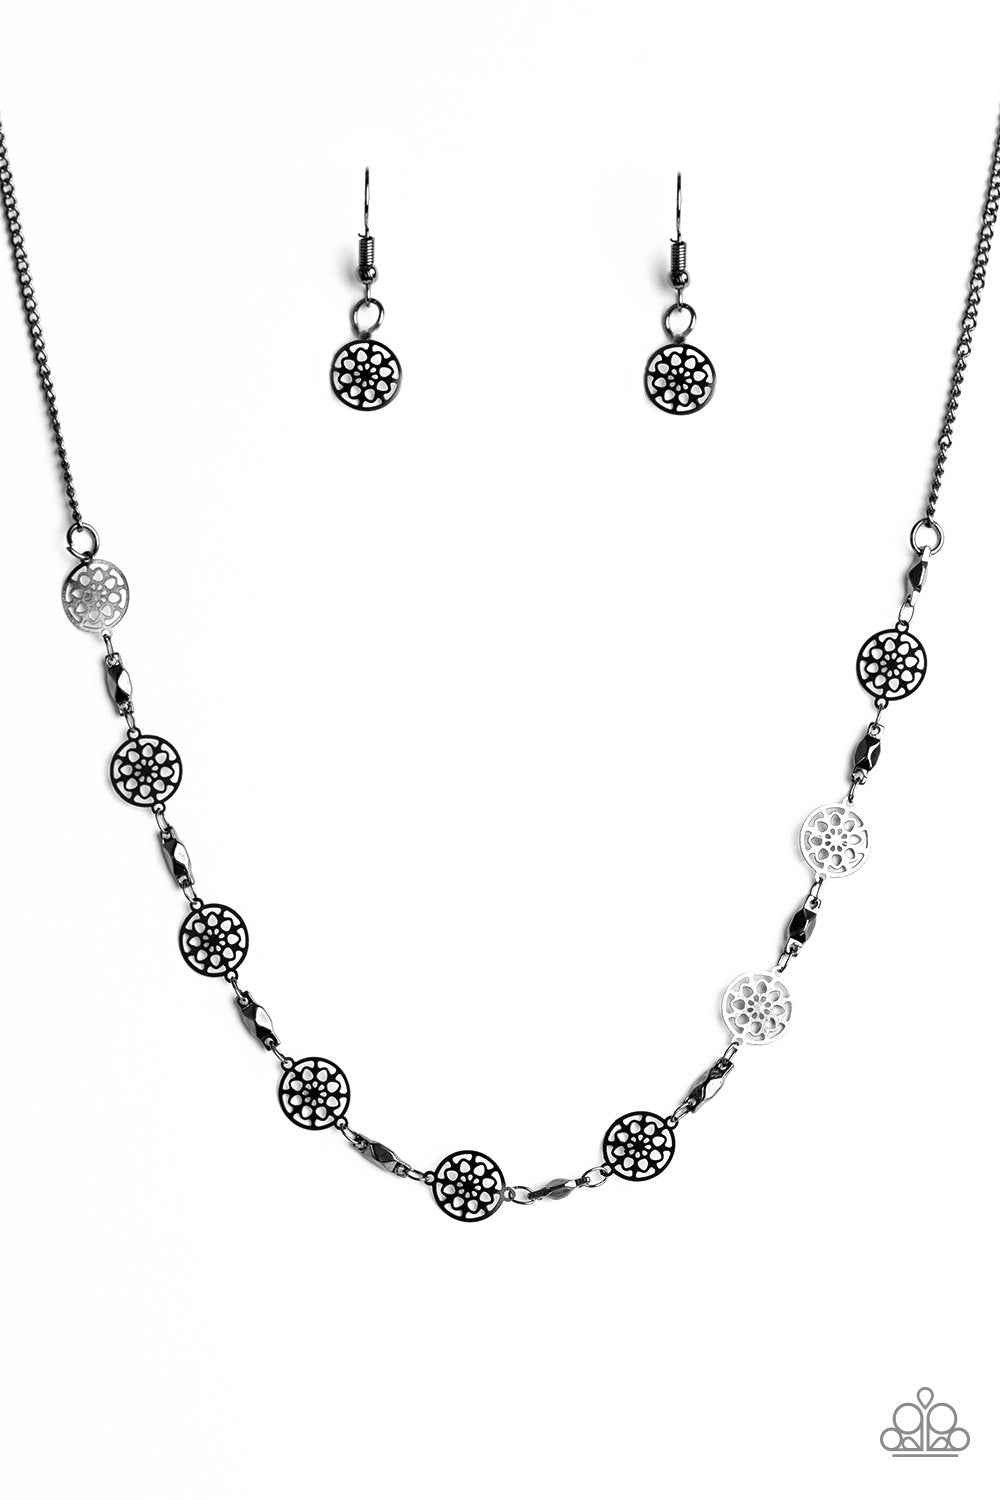 Wheel Power Gunmetal Black Necklace - Paparazzi Accessories-CarasShop.com - $5 Jewelry by Cara Jewels